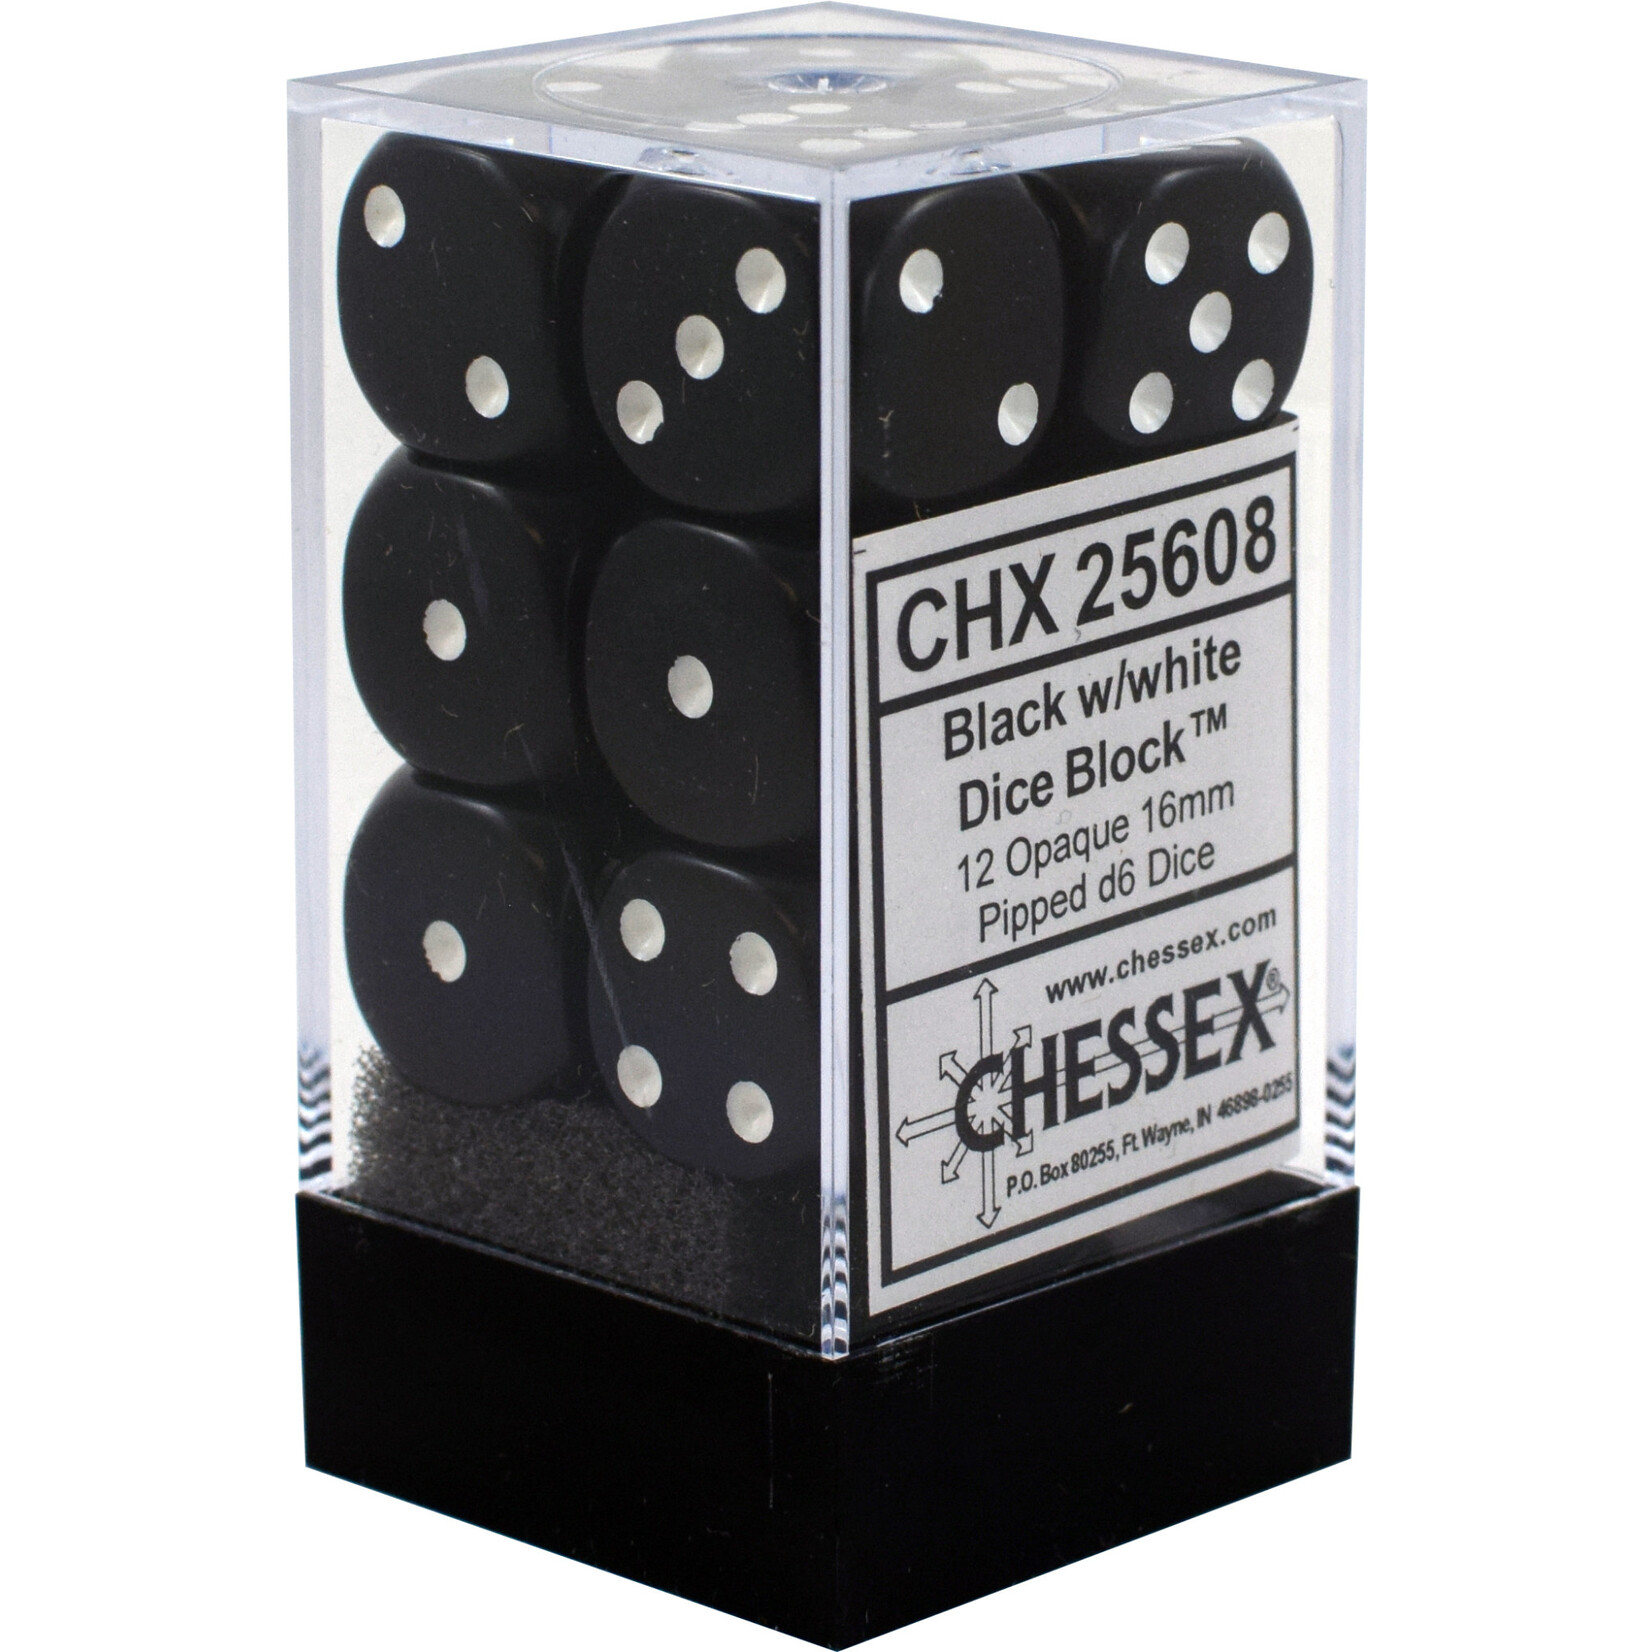 Chessex Opaque Black/white 16mm d6 Dice Block (12 dice)